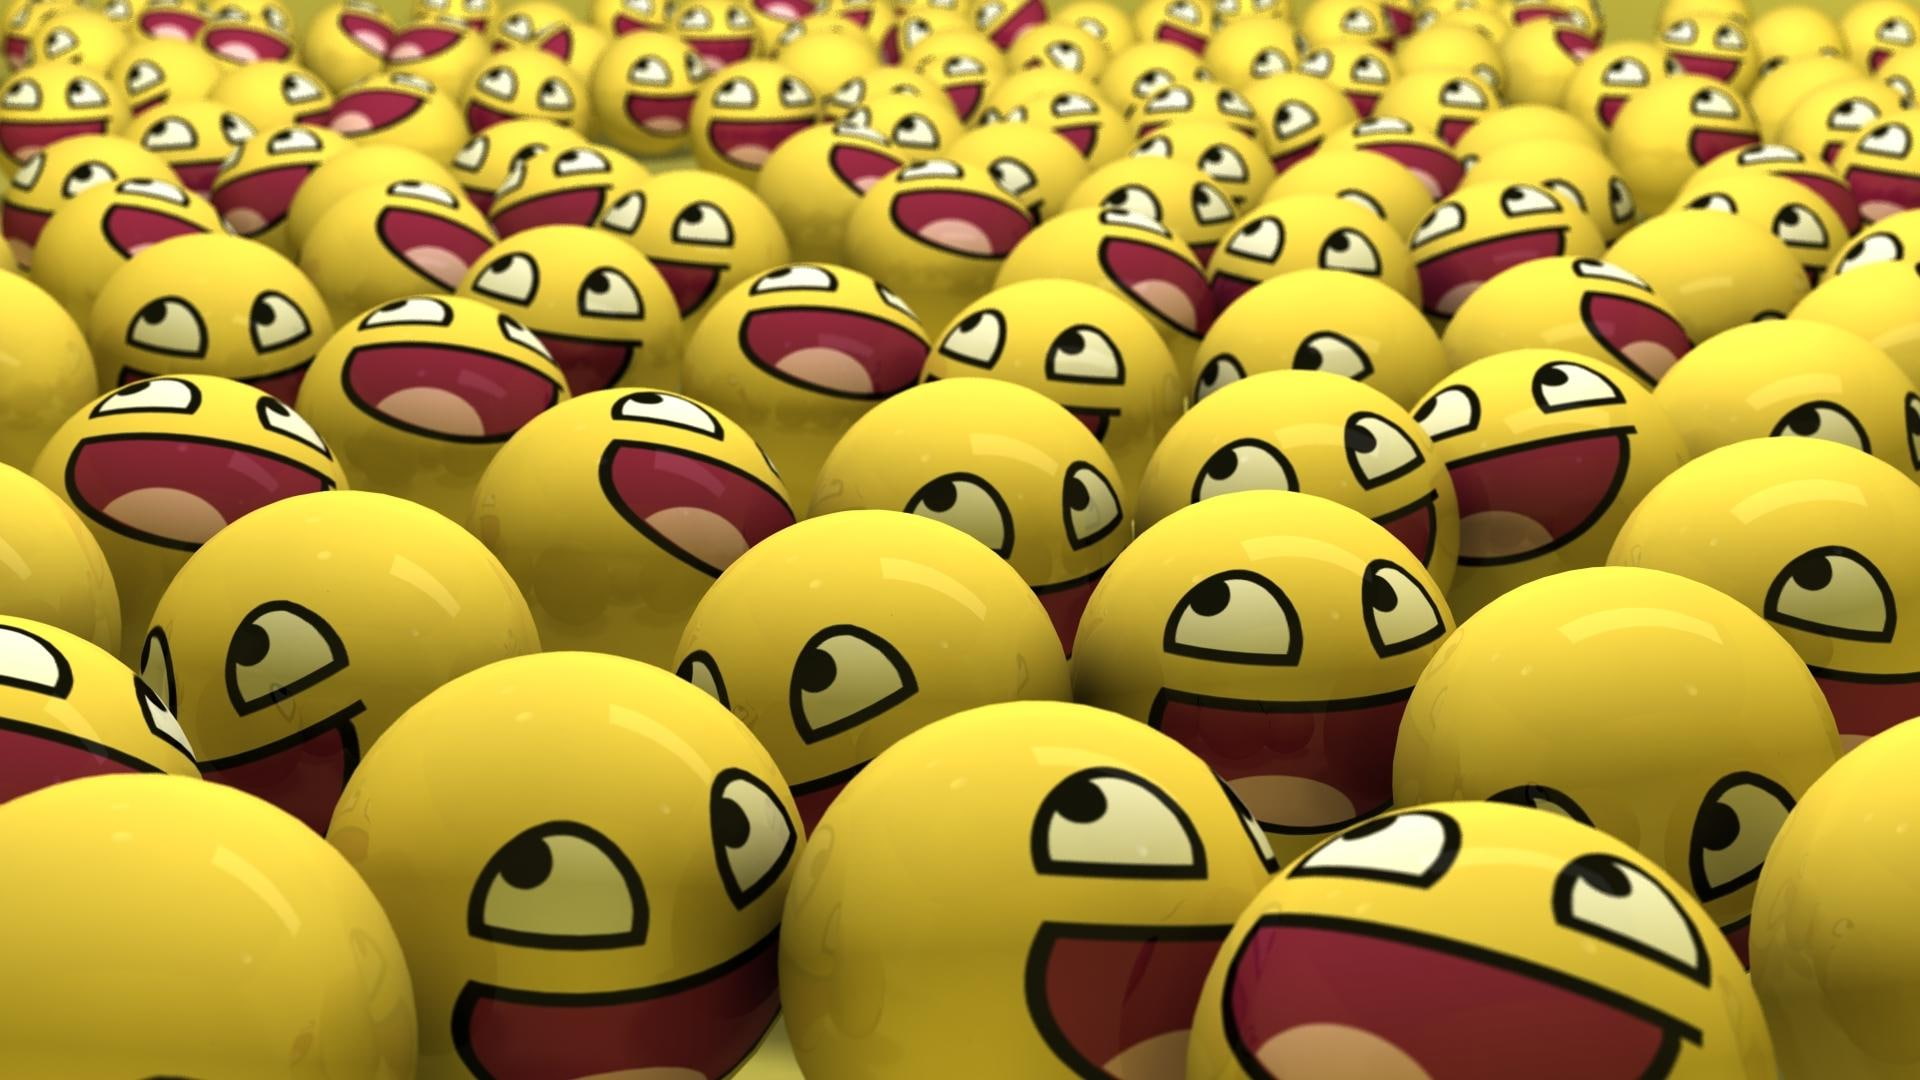 Awesome Faces, yellow emoji illustration, memes, 1920x1080